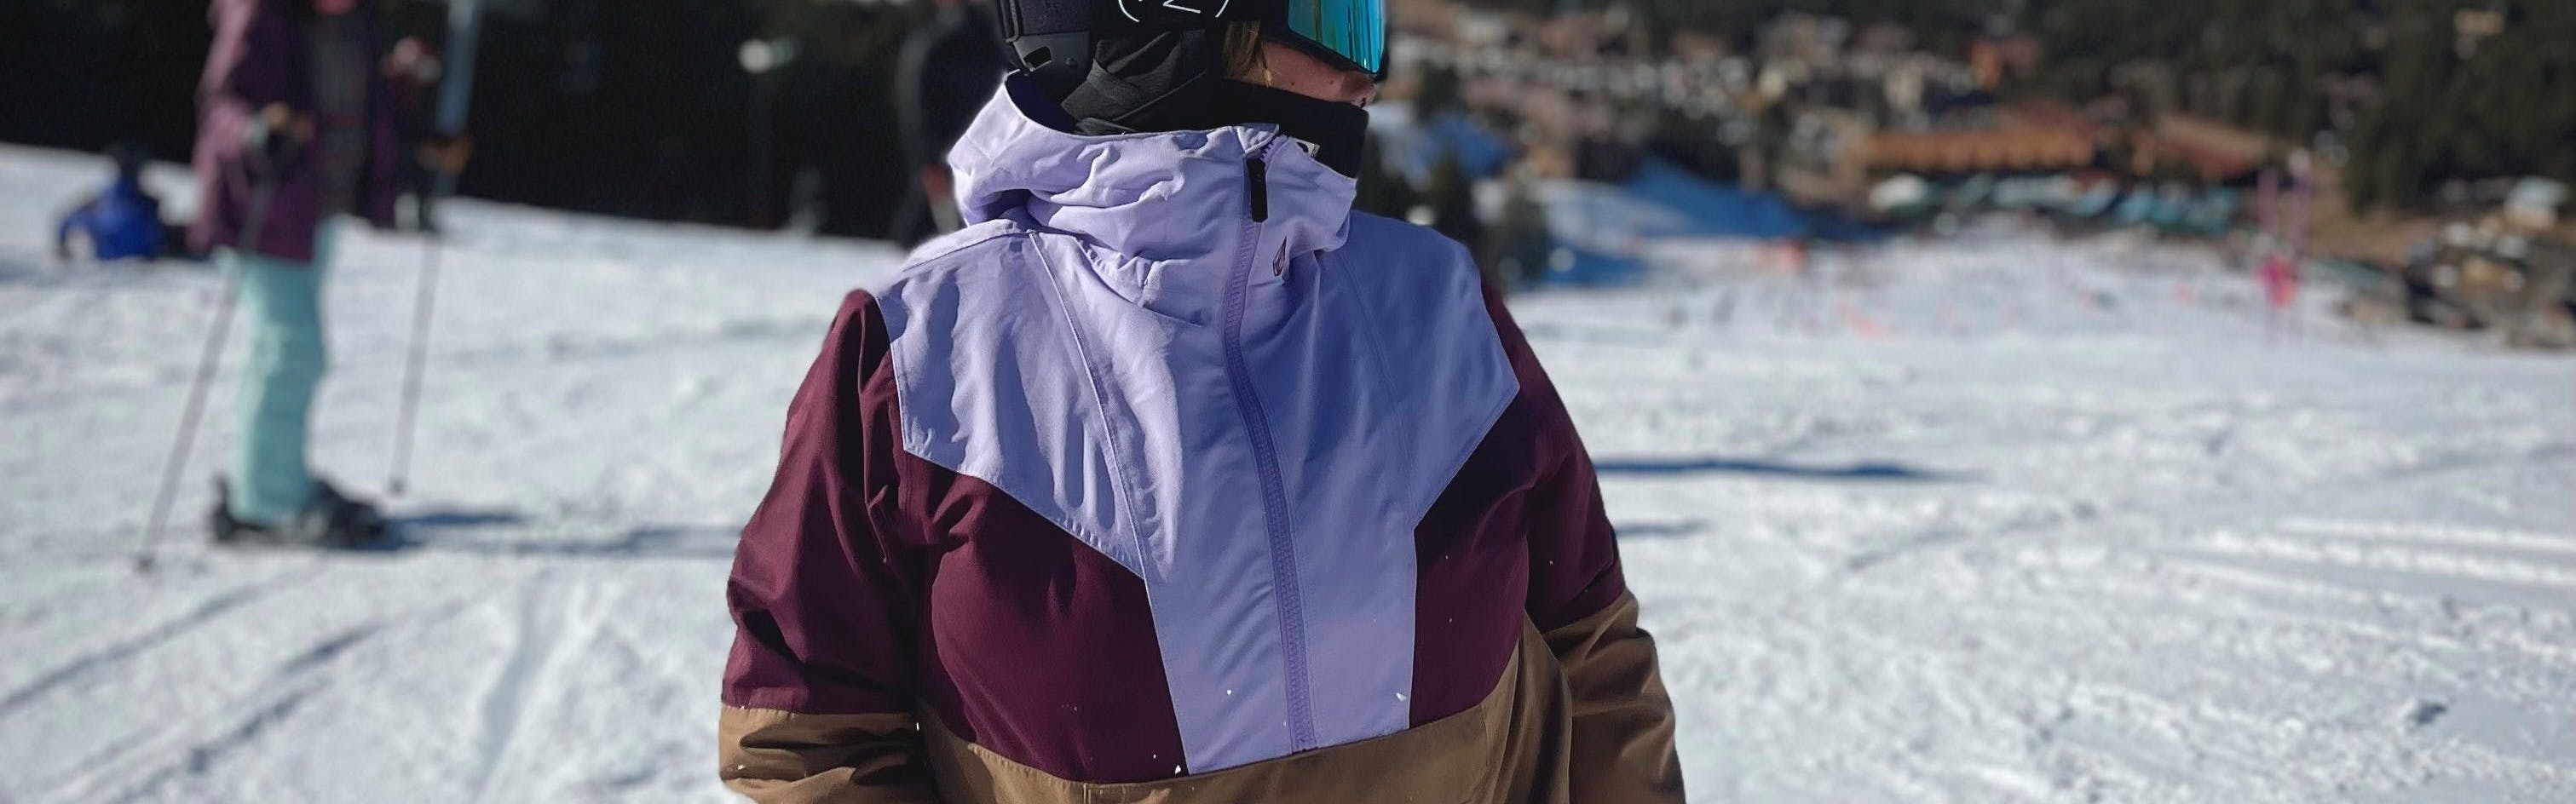 Helly Hansen Alpha 3.0 Ski Jacket: Blizzard-Worthy Style